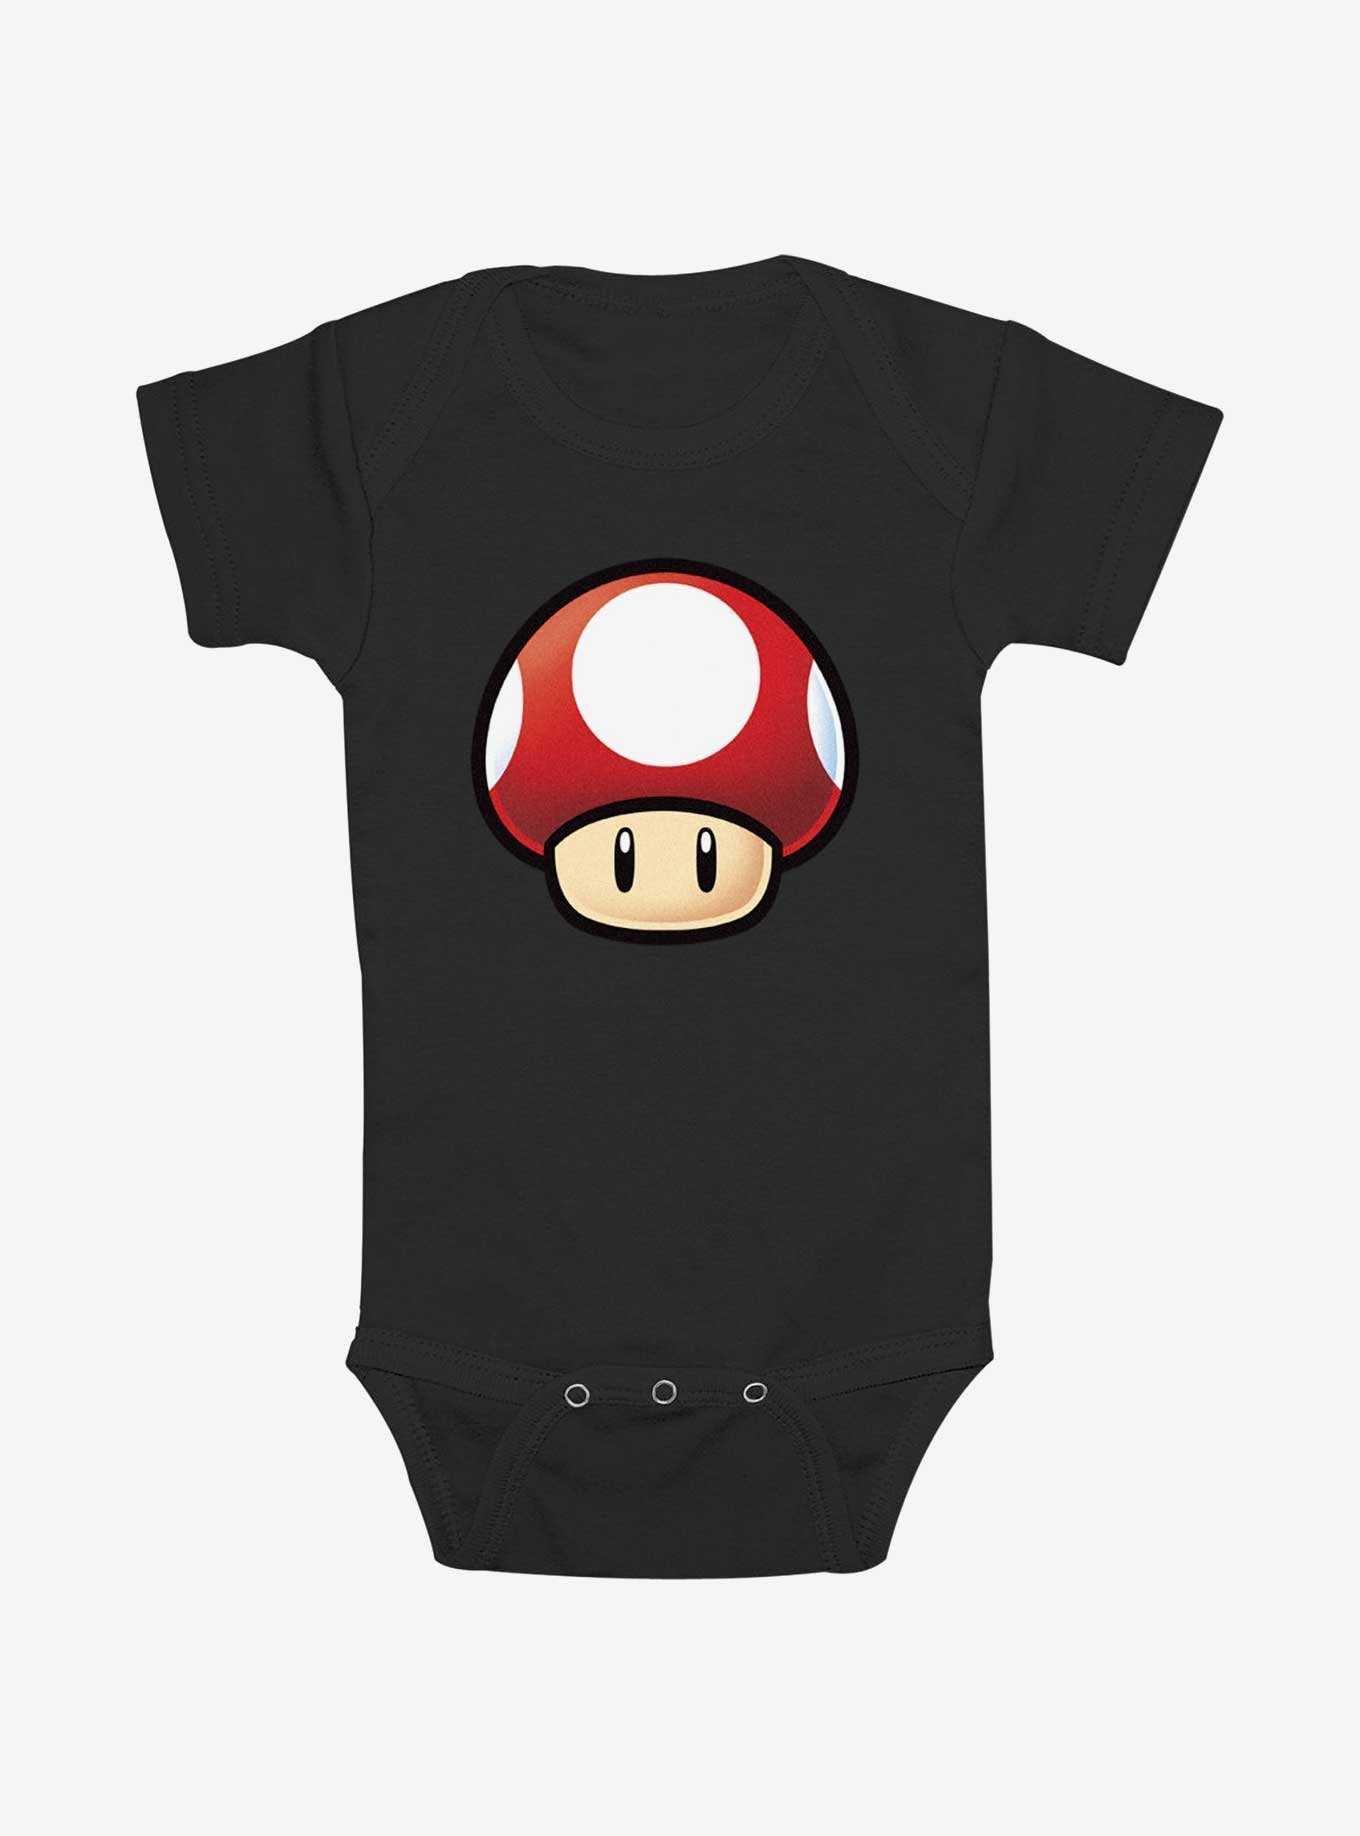 Nintendo Red Mushroom Infant Bodysuit, , hi-res